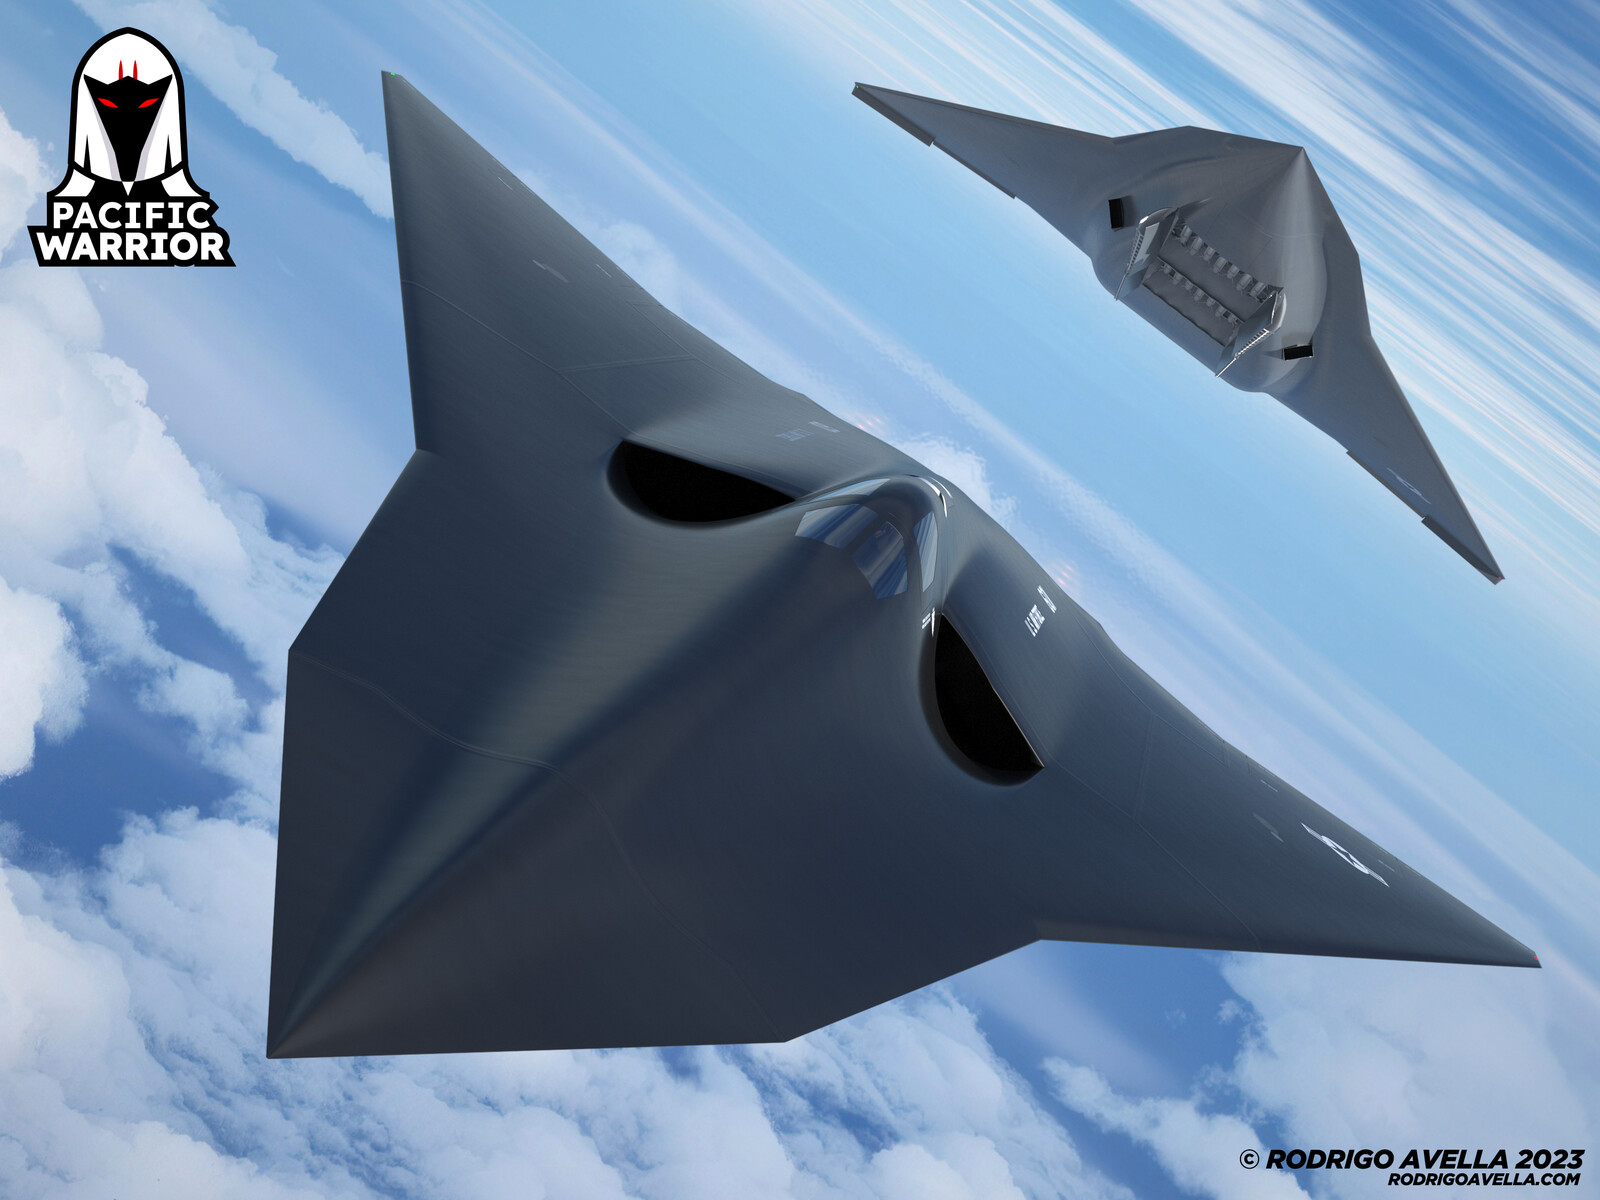 Pacific Warrior - Next Generation Air Dominance concept